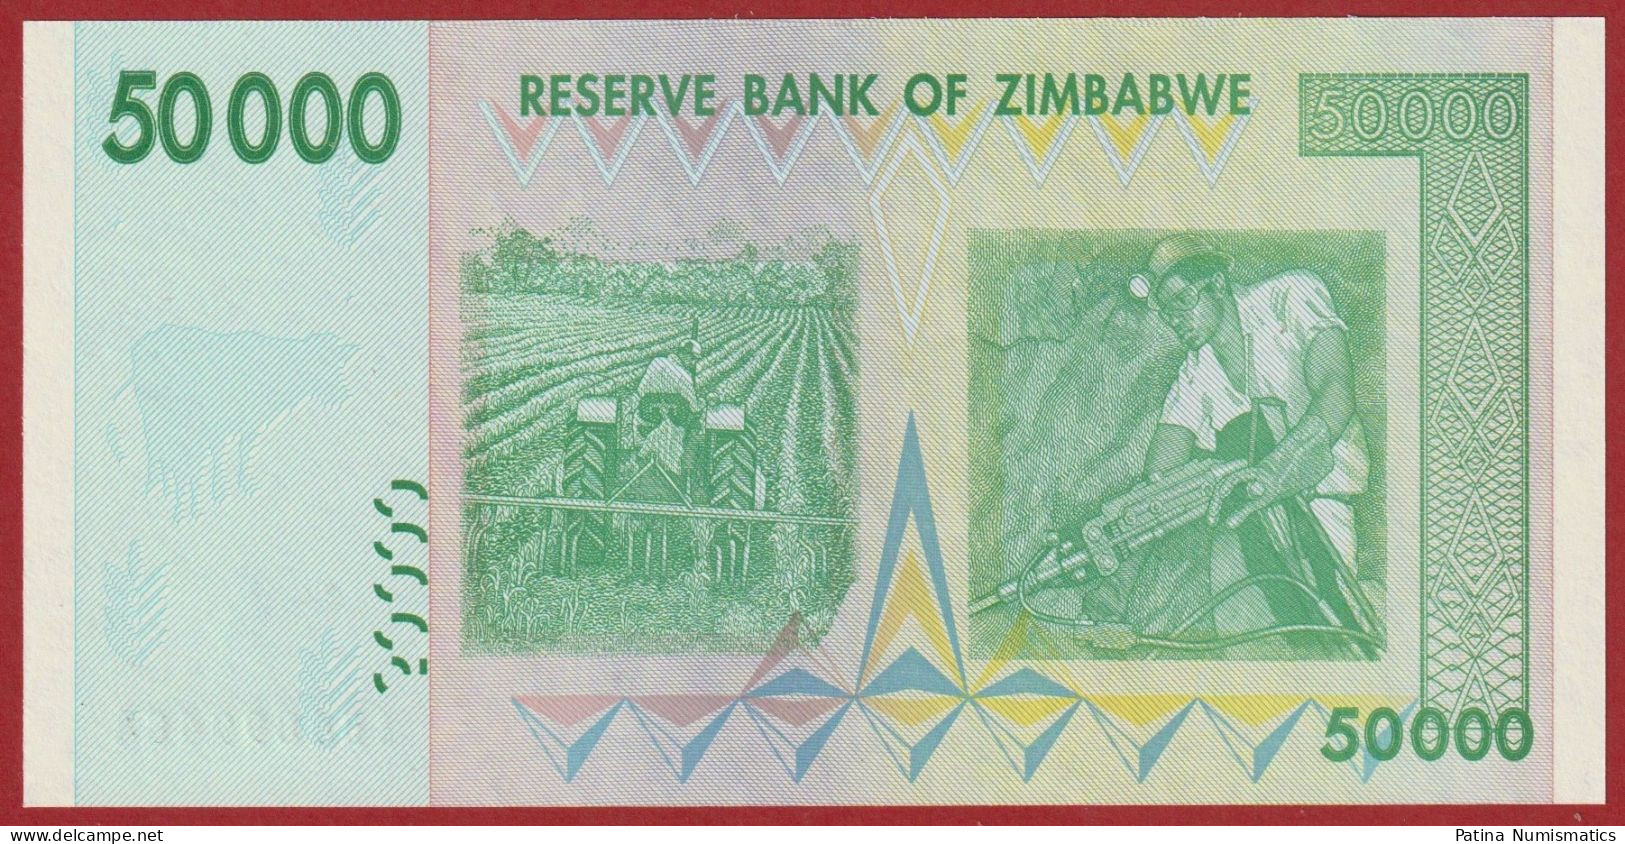 Zimbabwe 50000 Dollars ( 50,000 ) 2008 P 74 AB Prefix Crisp GEM UNC - Zimbabwe